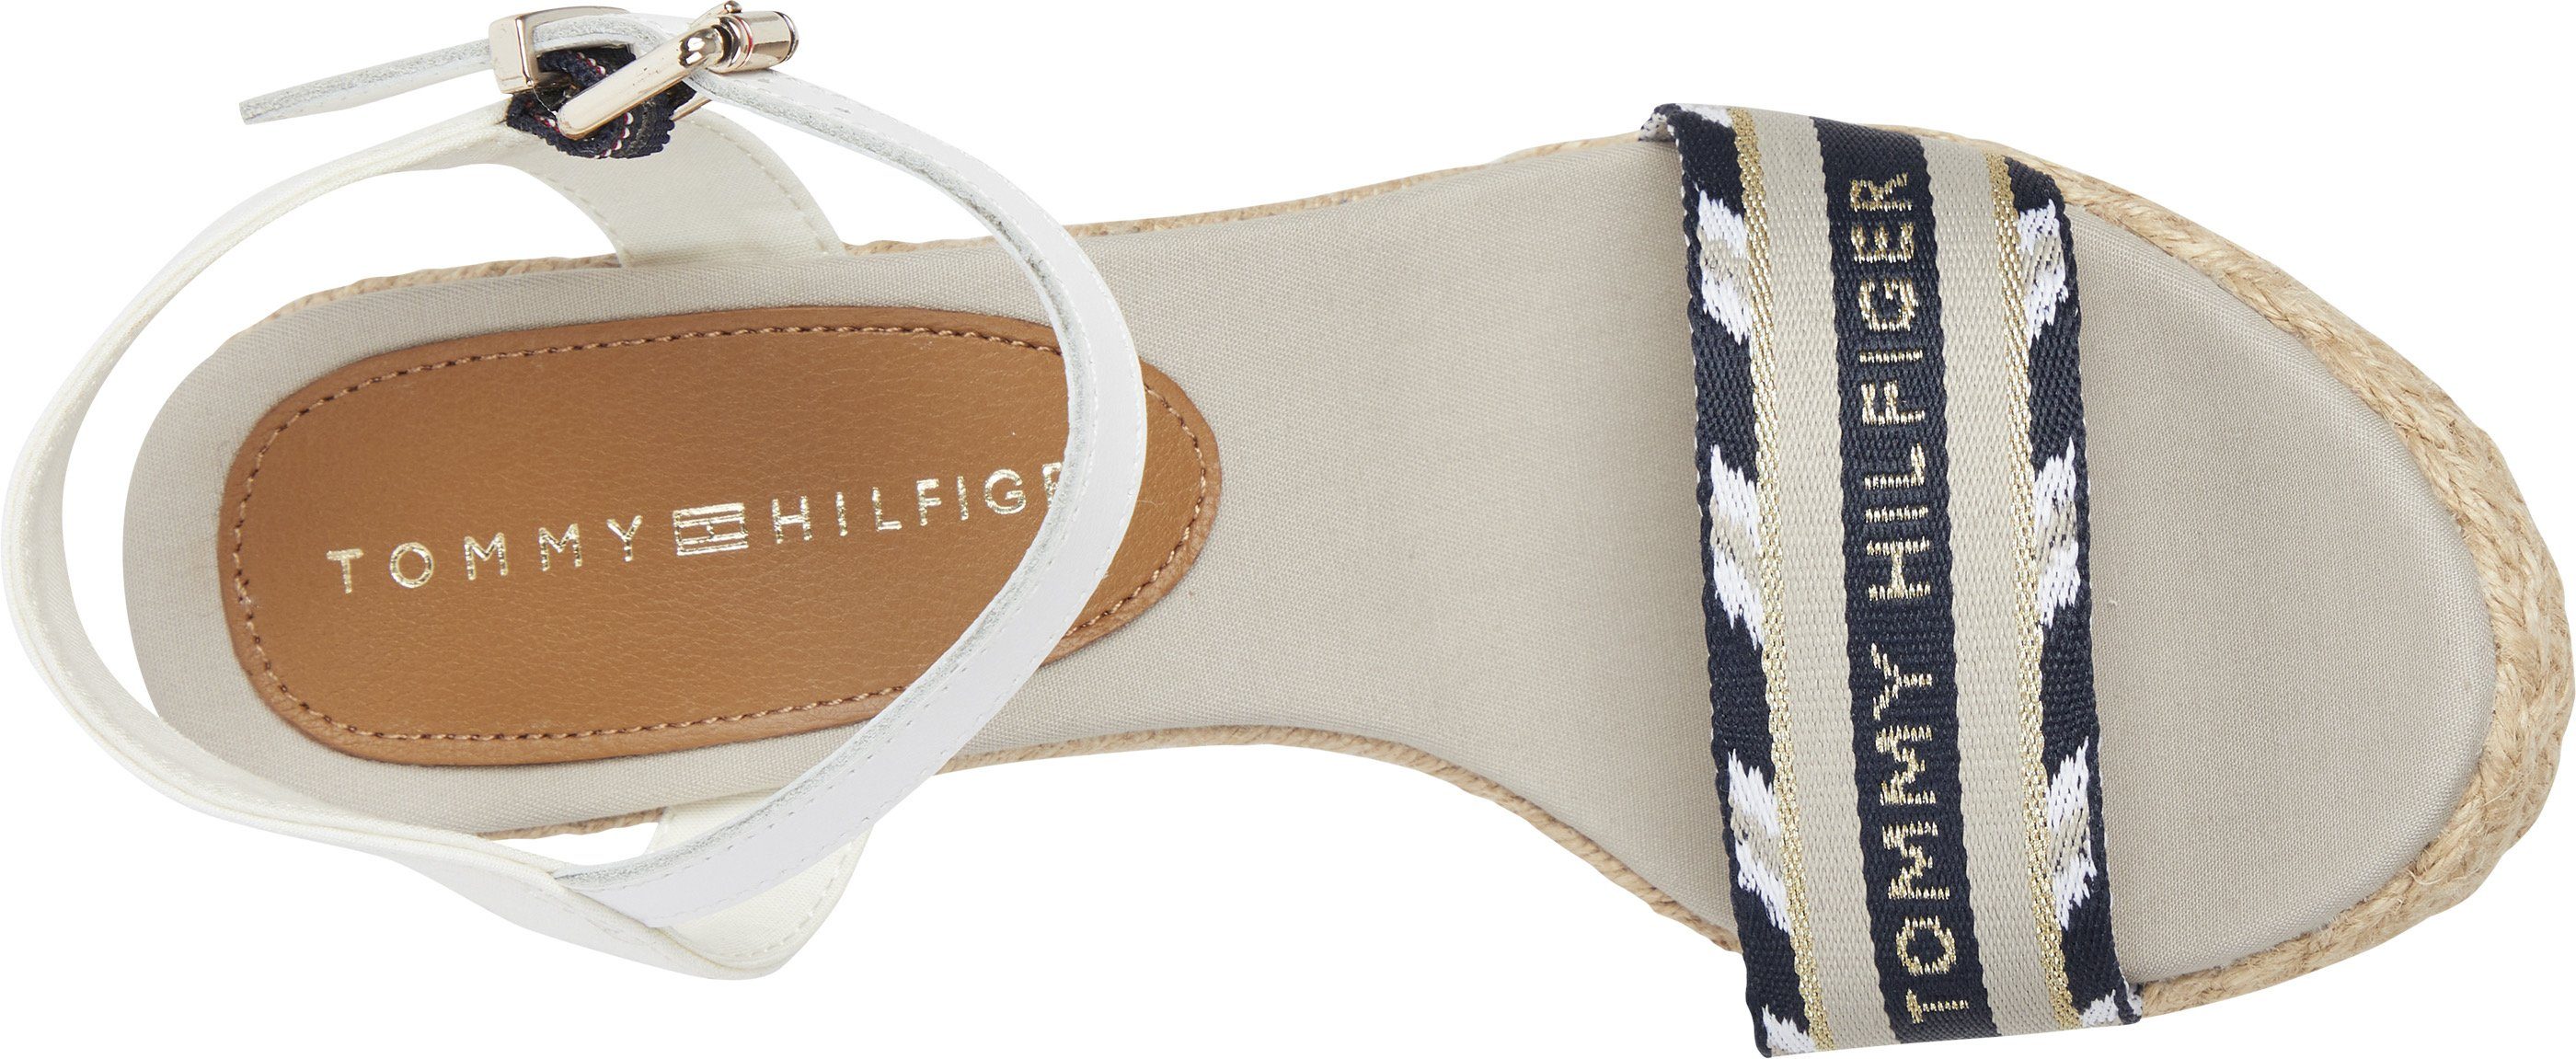 Tommy Hilfiger CORPORATE WEBBING Logoschriftzug High-Heel-Sandalette mit ecru HIGH WEDGE